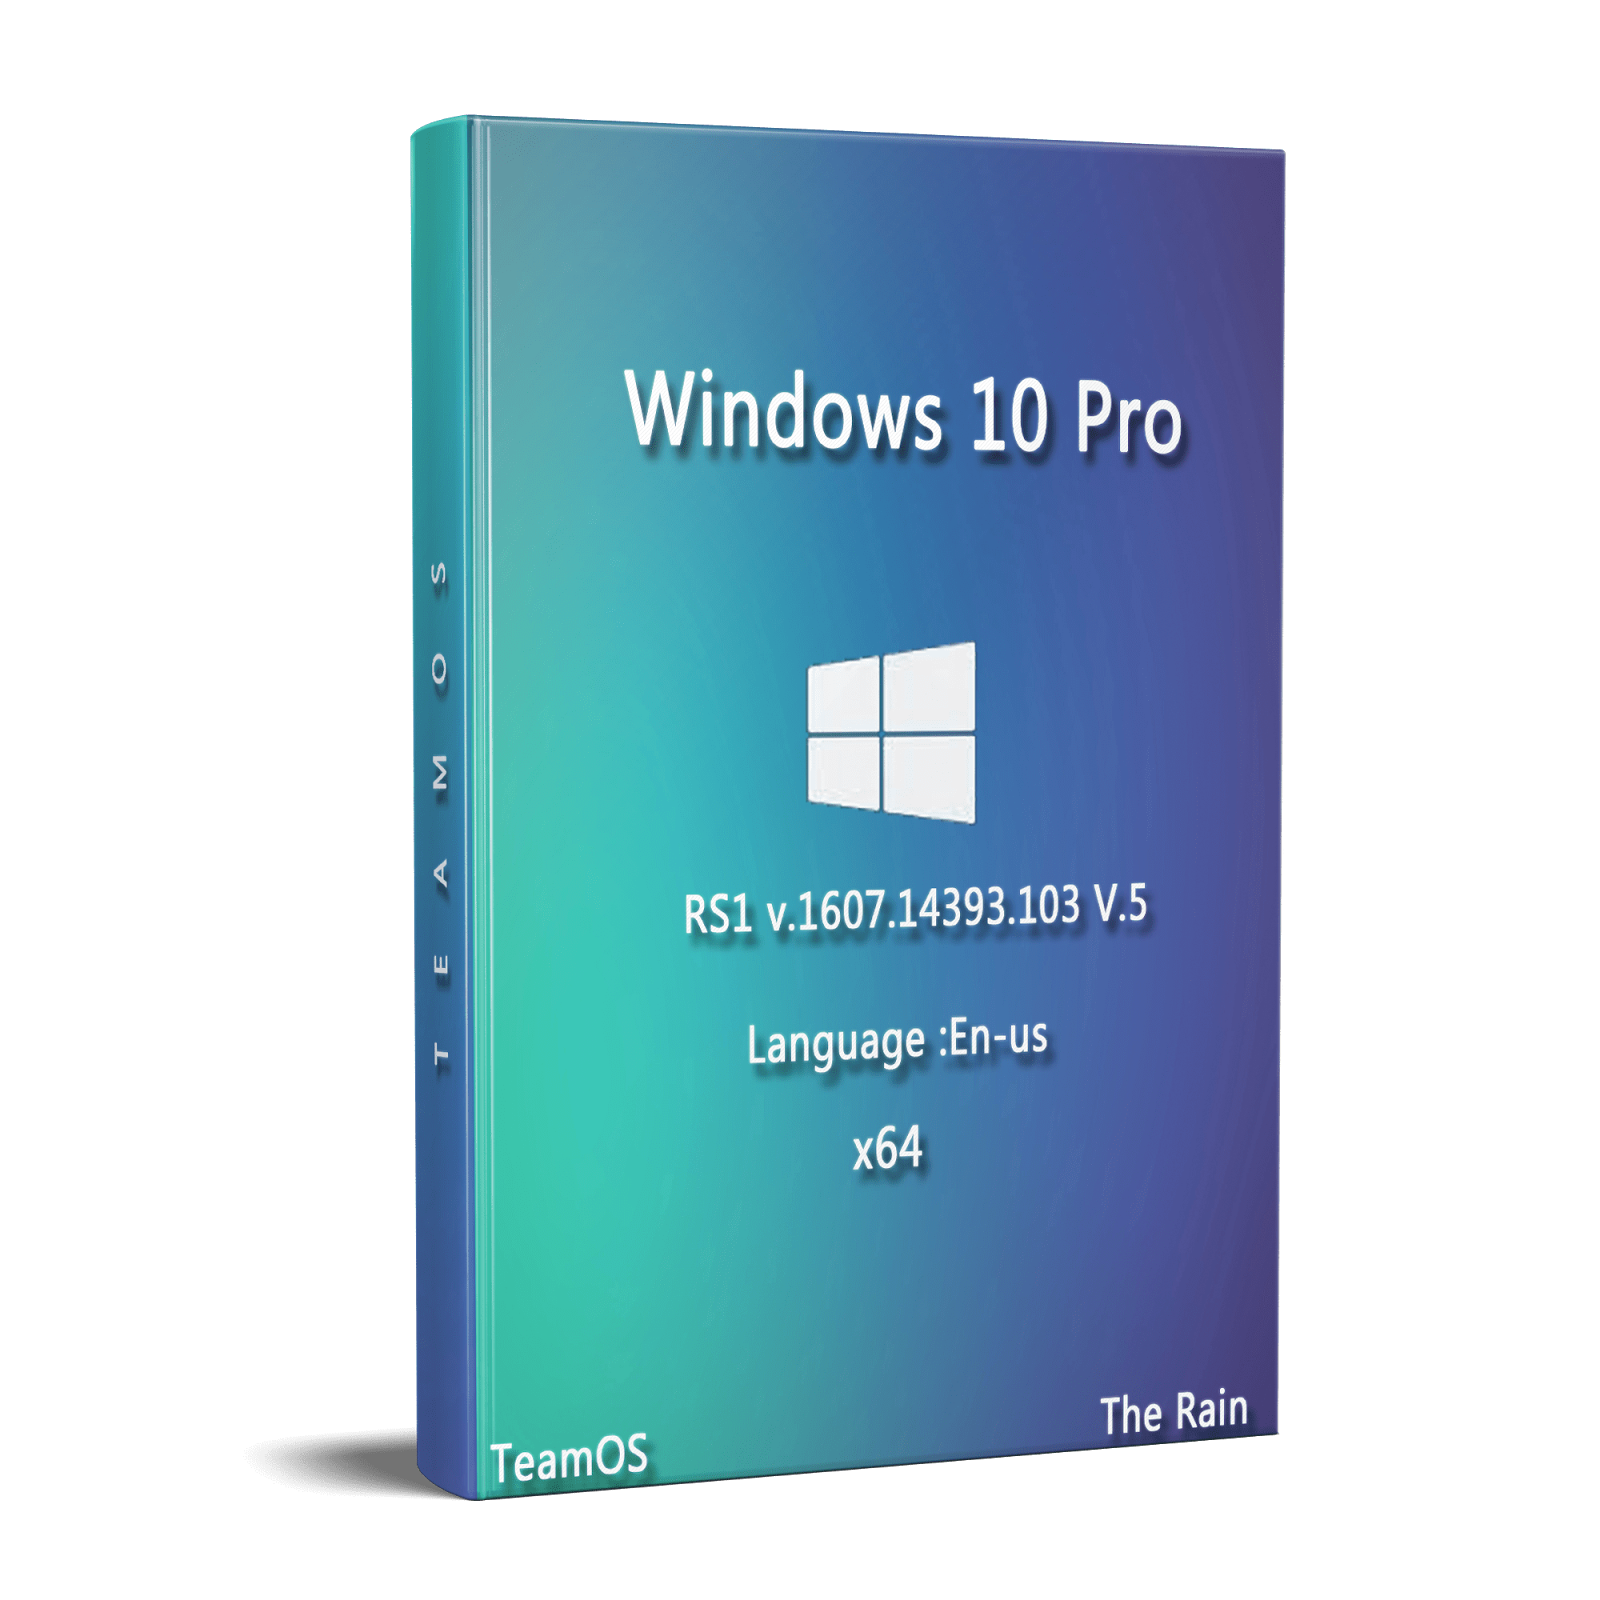 windows 10 pro 2017 download iso